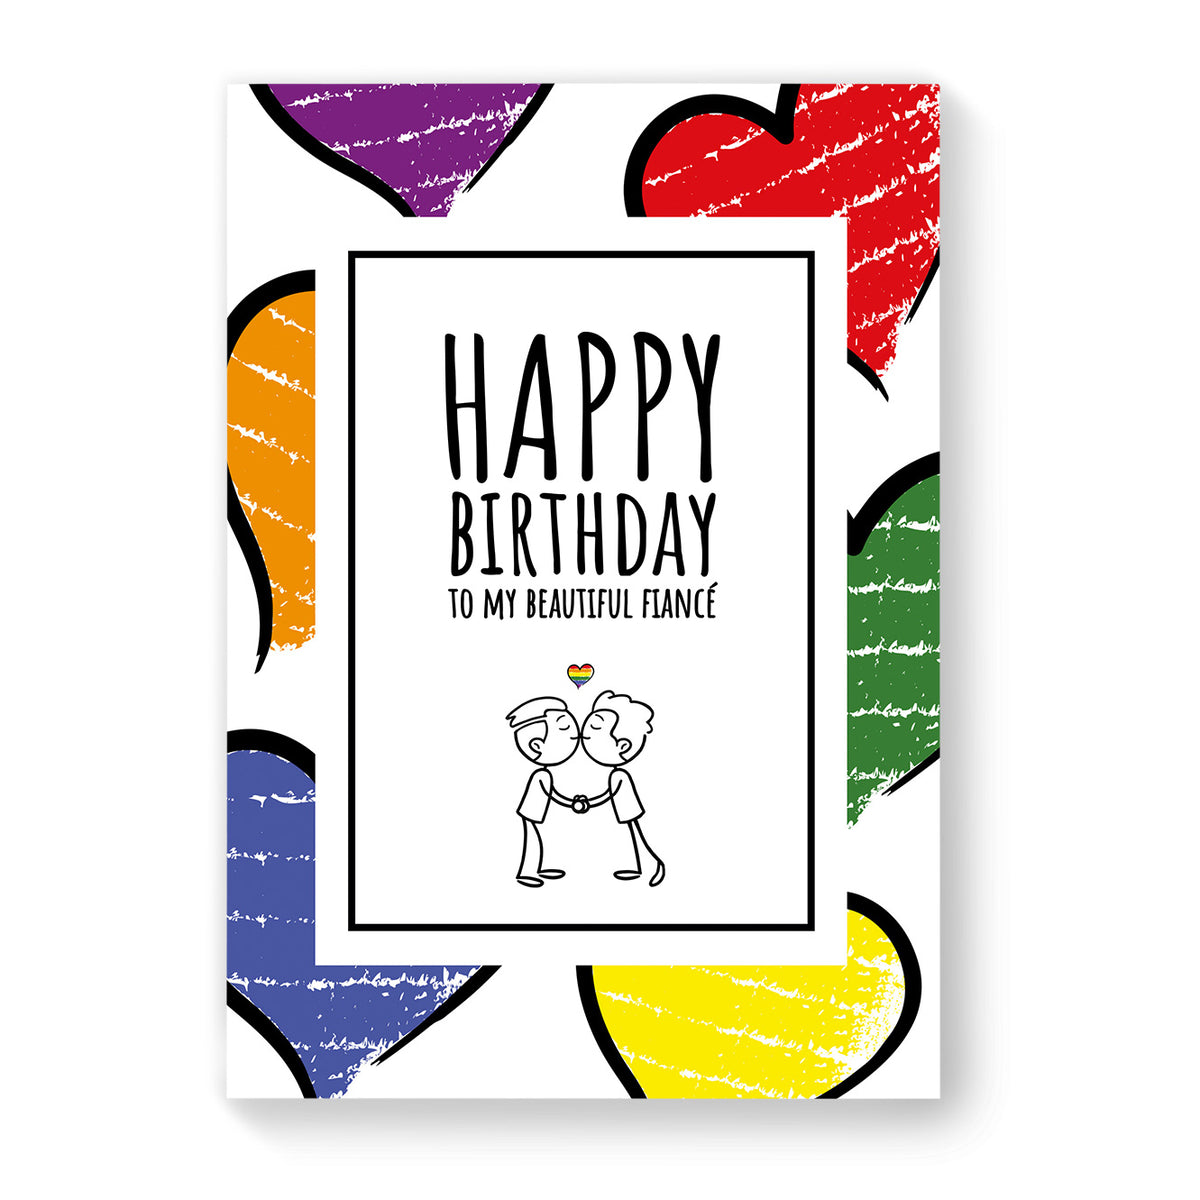 Happy Birthday to my beautiful fiancé - Gay Birthday Card - Large Heart | Gift